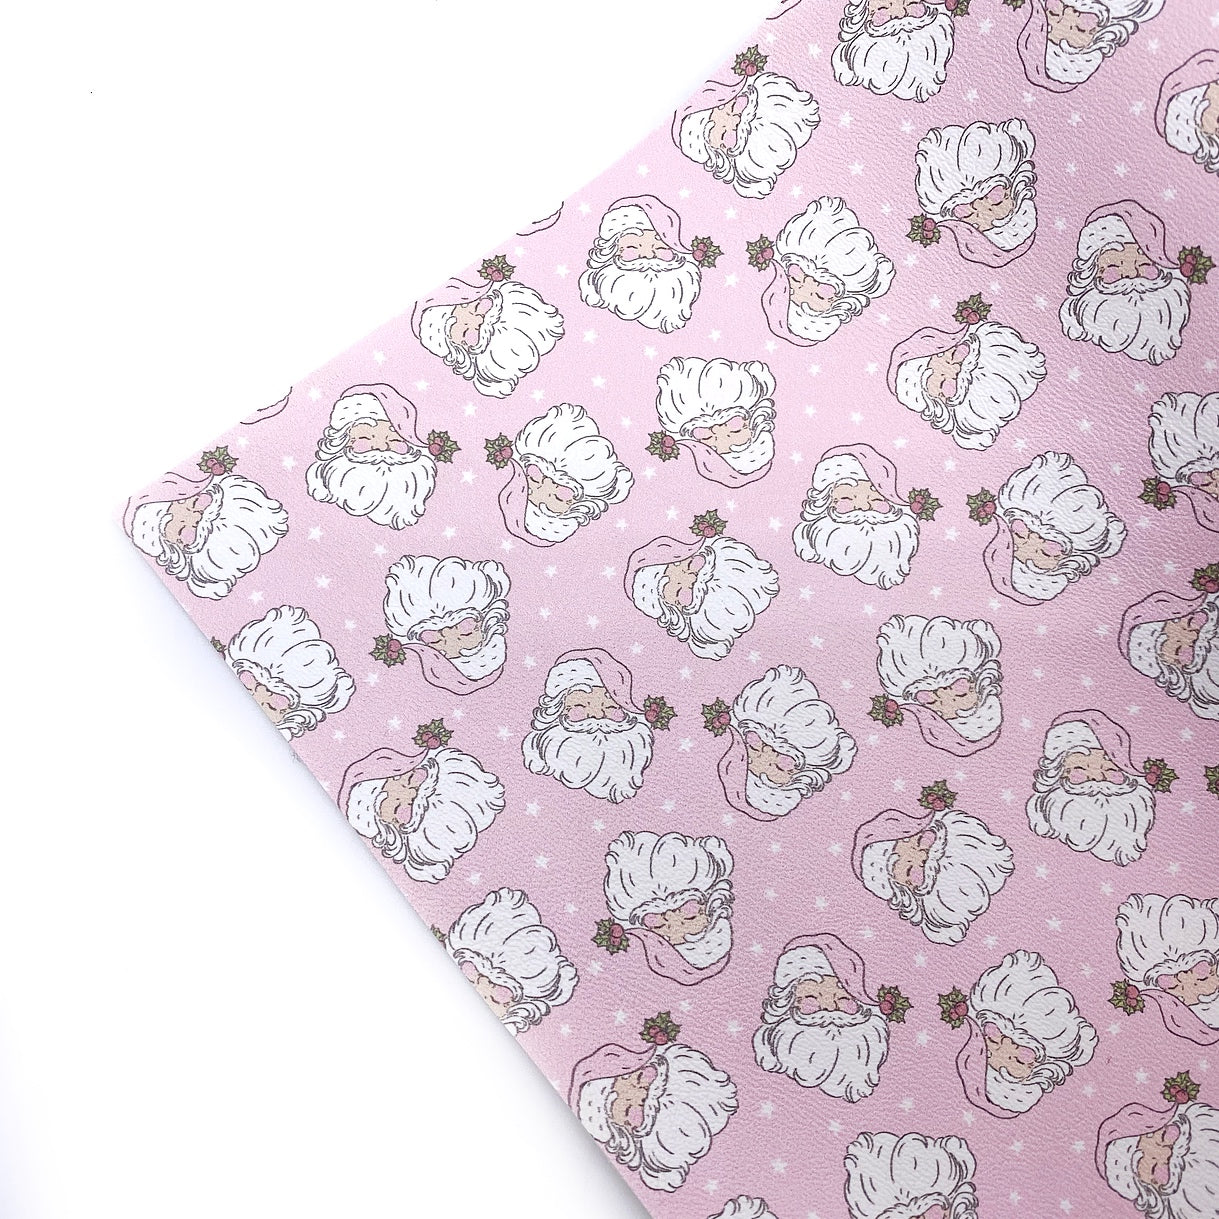 Pink Vintage Santa Premium Faux Leather Fabric Sheets